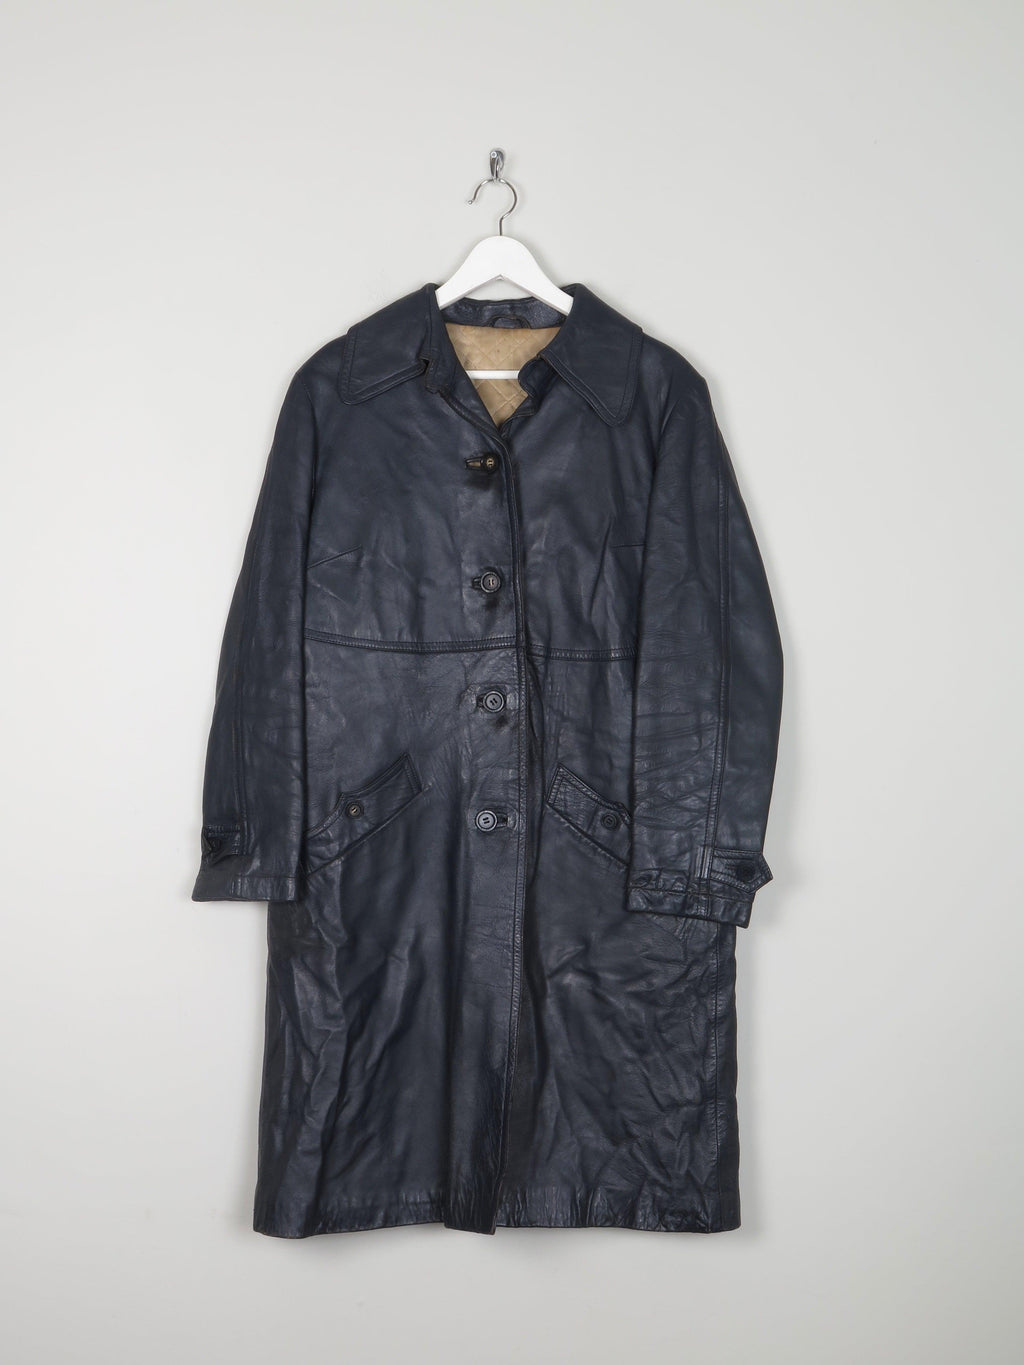 Women’s Navy 1960s Leather Short Coat 12/14 - The Harlequin